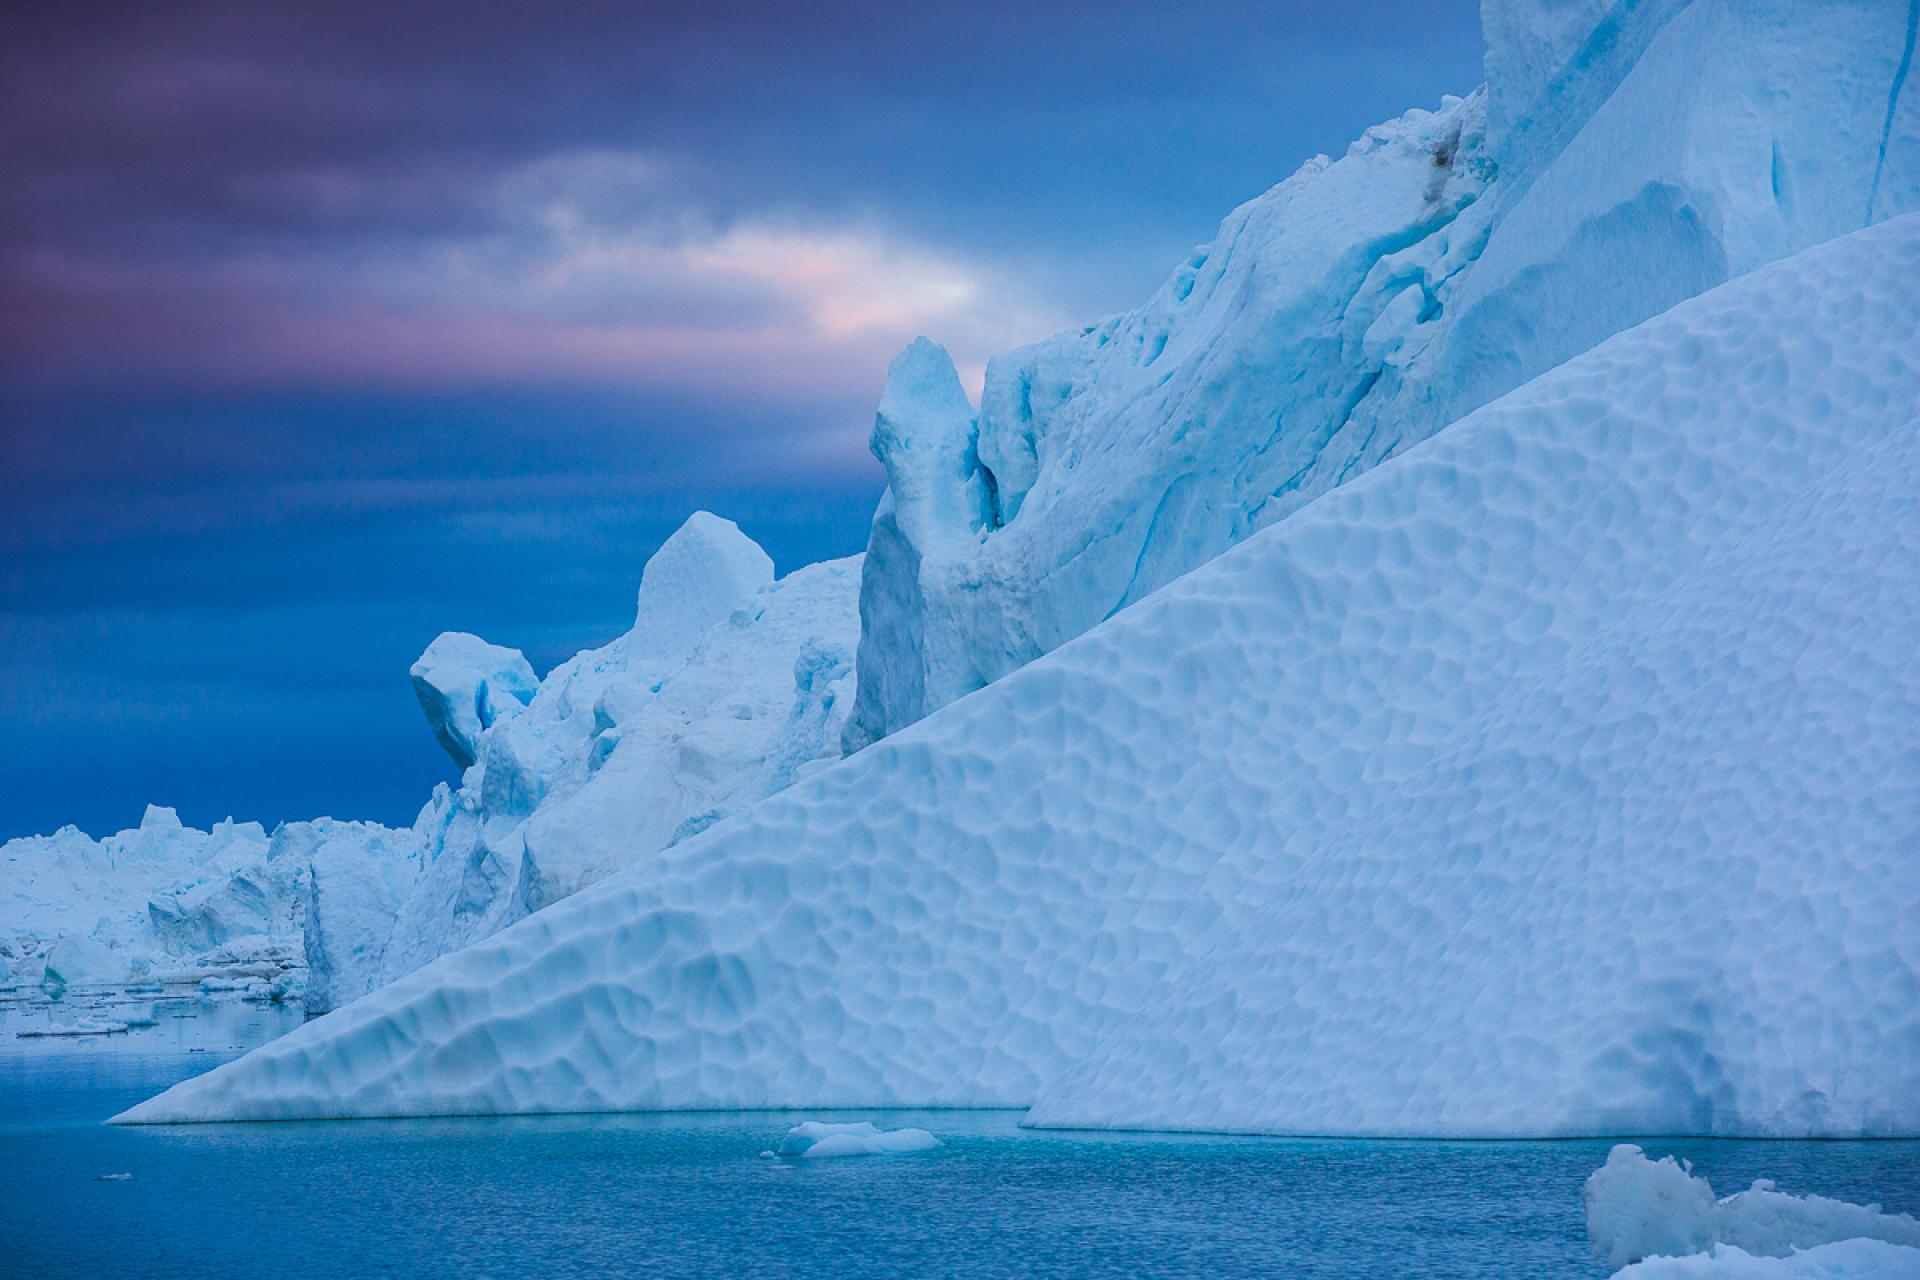 London Photography Awards Winner - Beautiful Iceberg 